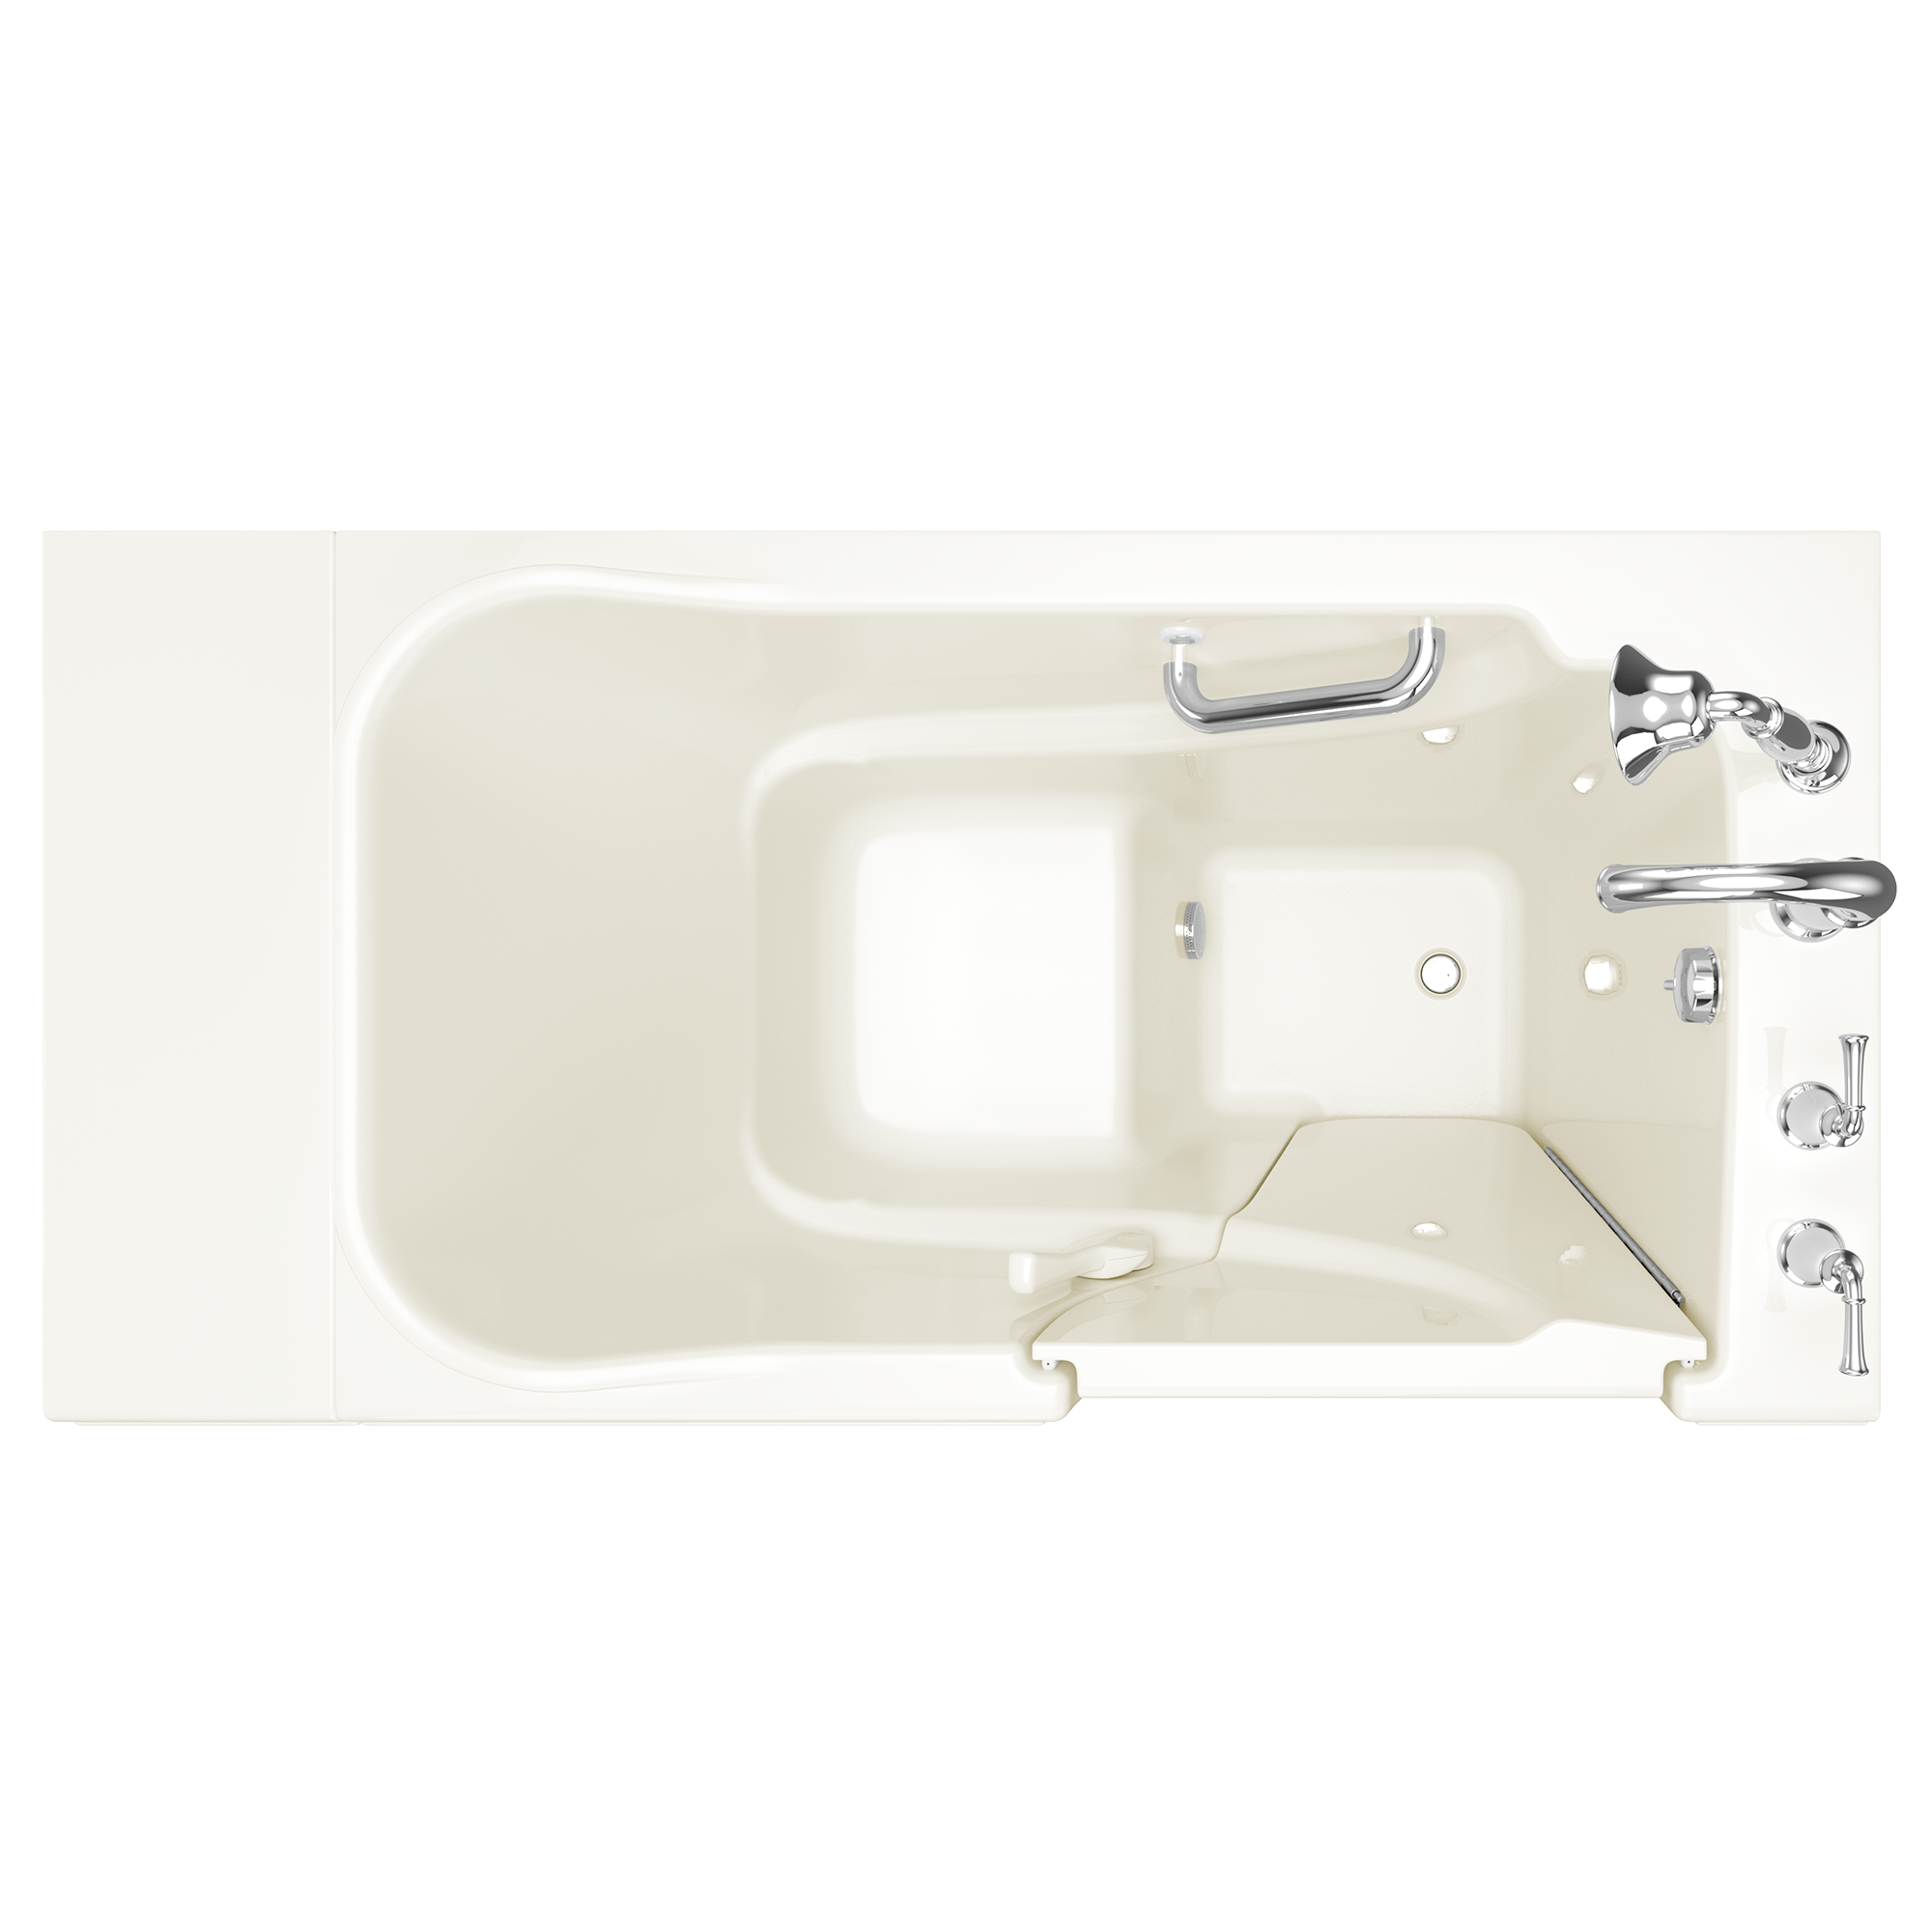 Gelcoat Value Series 30x52 Inch Soaking Walk-In Bathtub - Right Hand Door and Drain